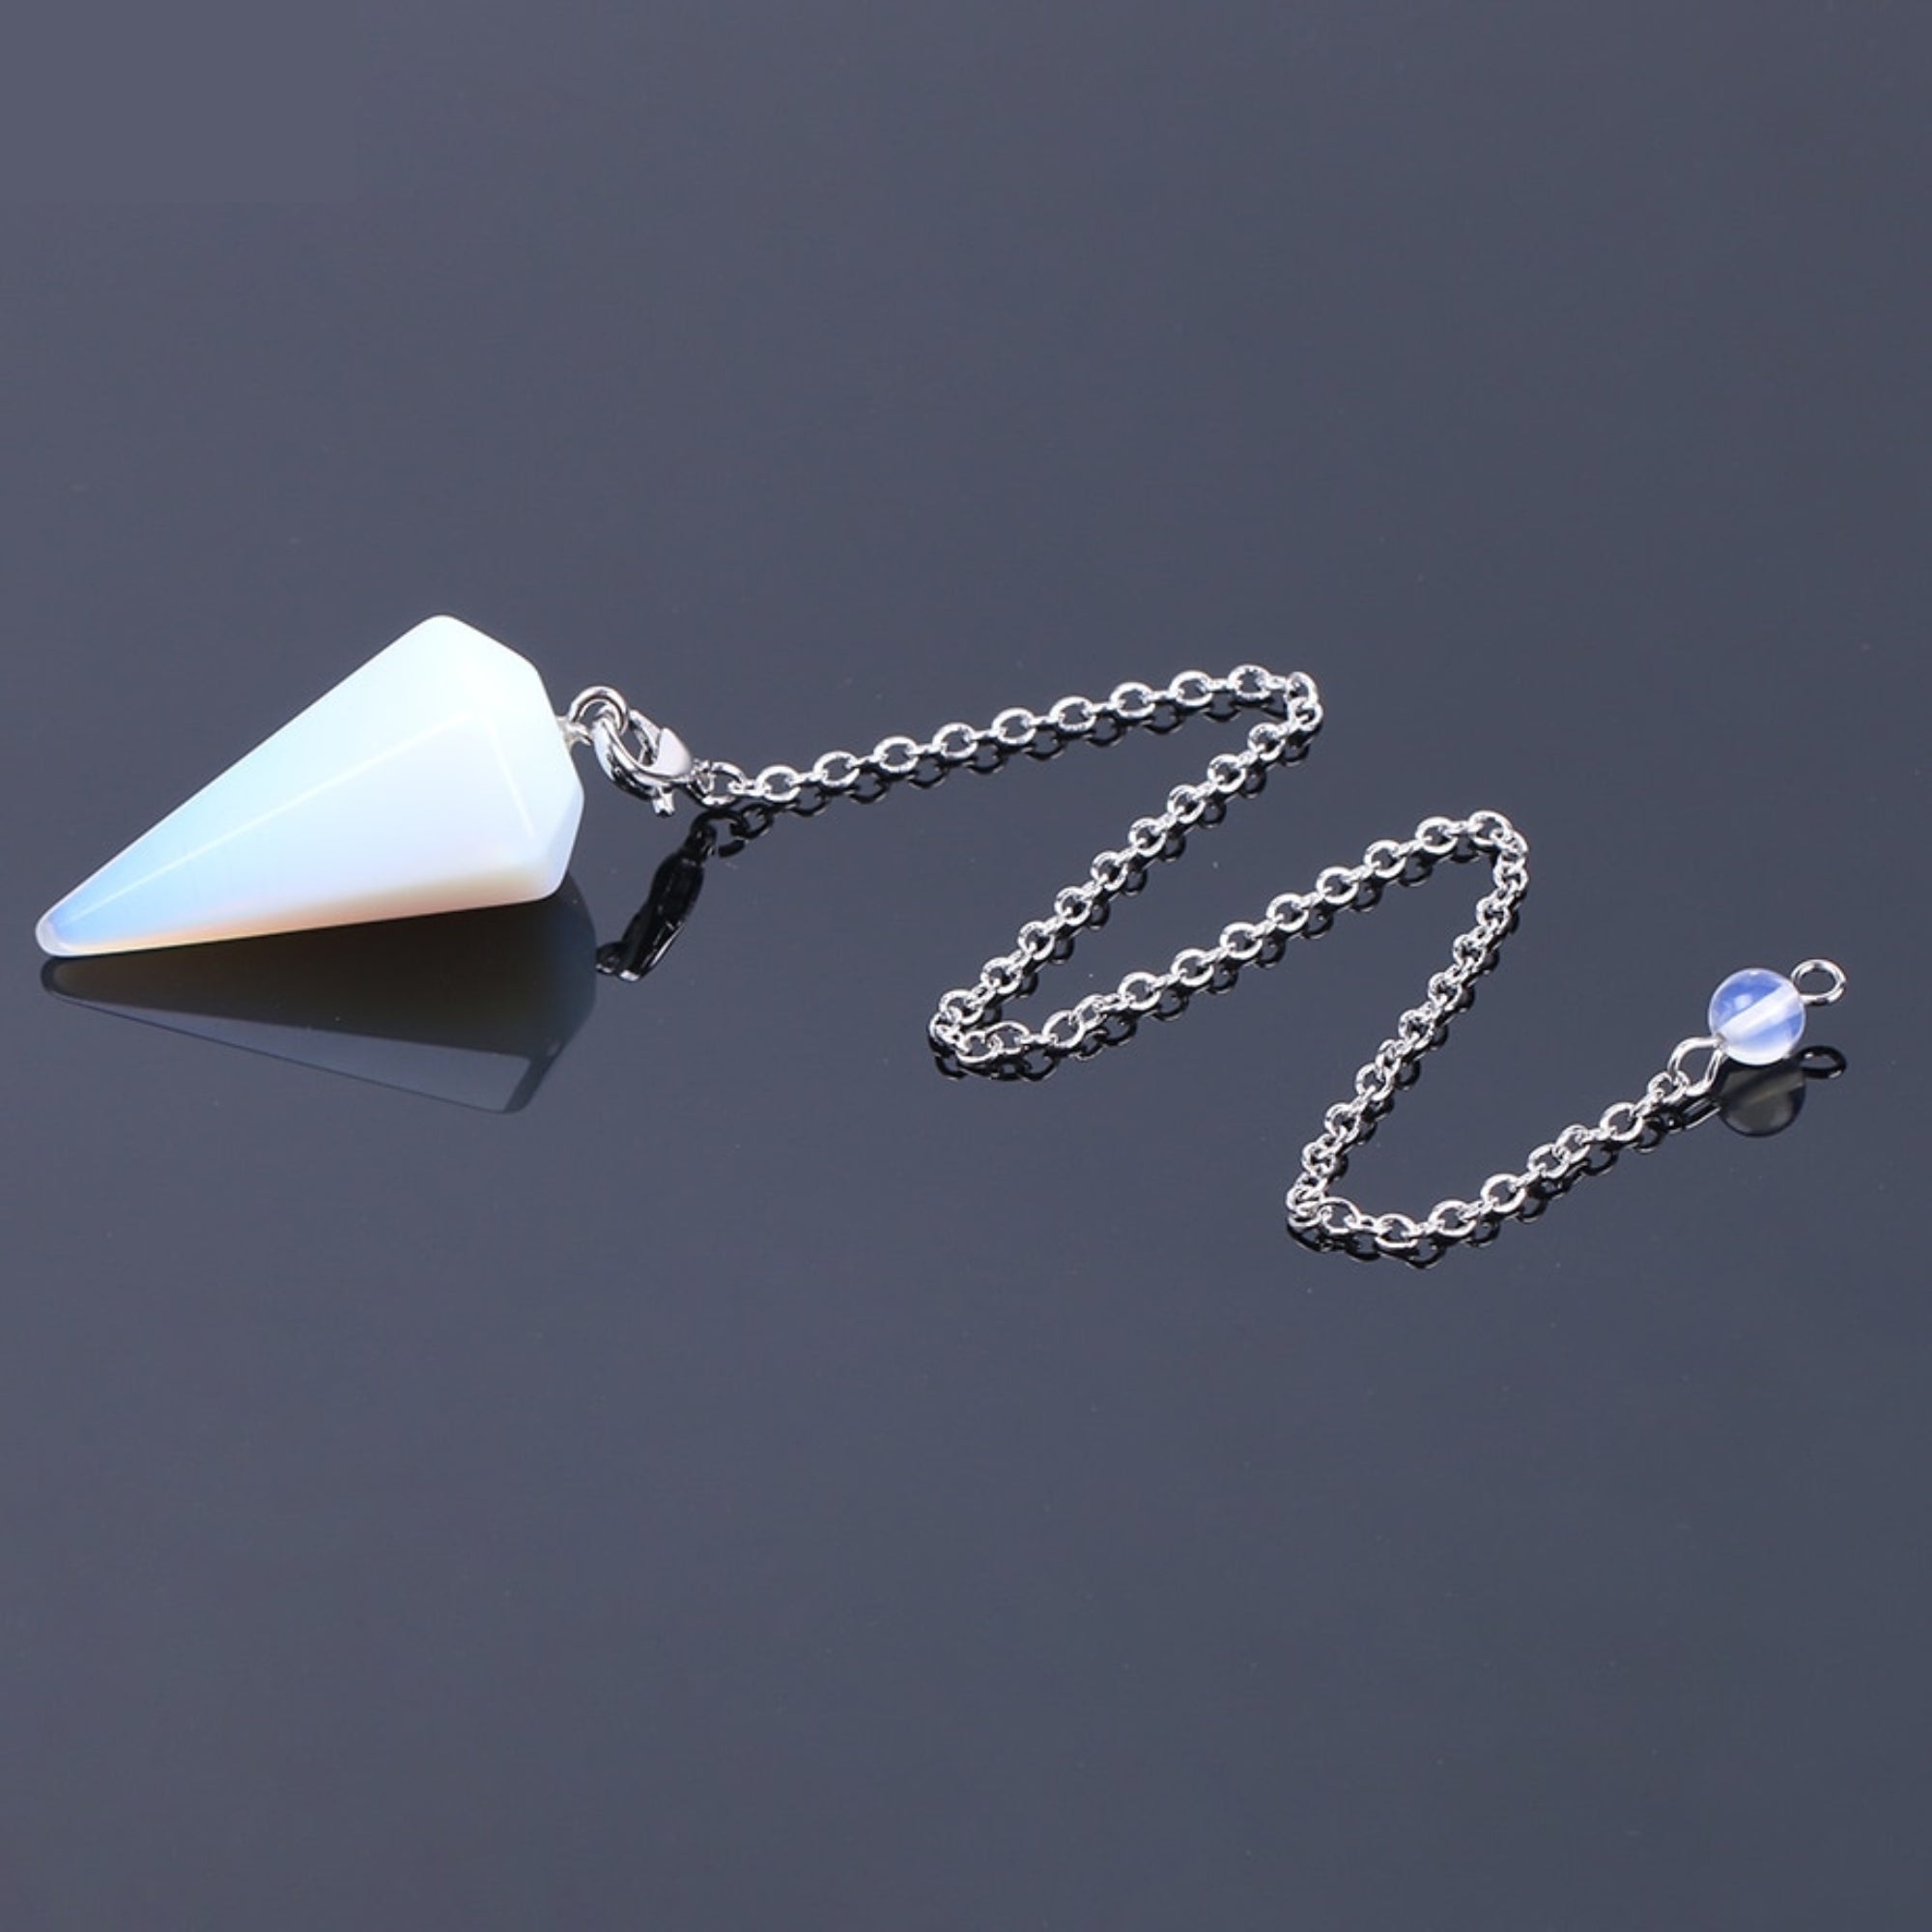 Healing Crystal Pendulum for Divination Dowsing Readings | Pink Quartz Pendulums Of Natural Gemstones For Fortune Telling | Apollo Tarot Shop